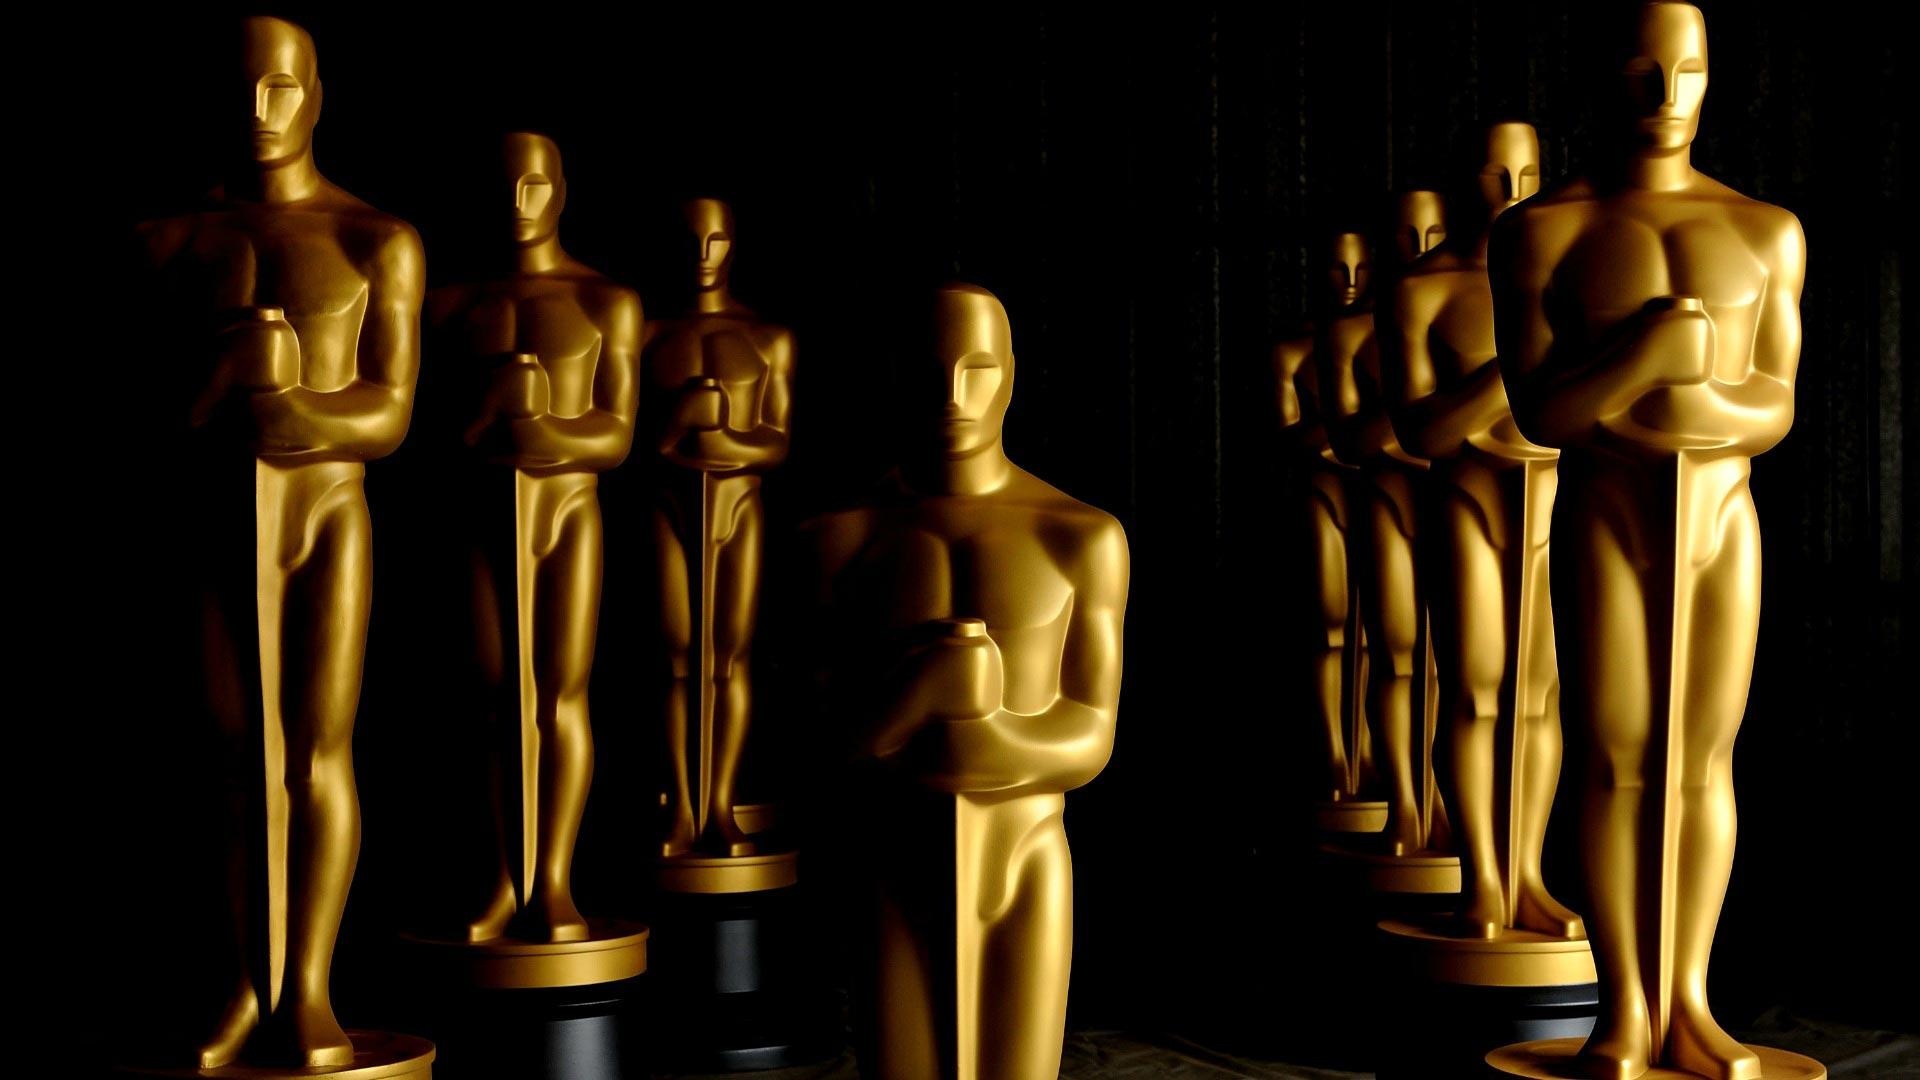 Oscars, Red carpet elegance, Celebrities honored, Film industry recognition, 1920x1080 Full HD Desktop